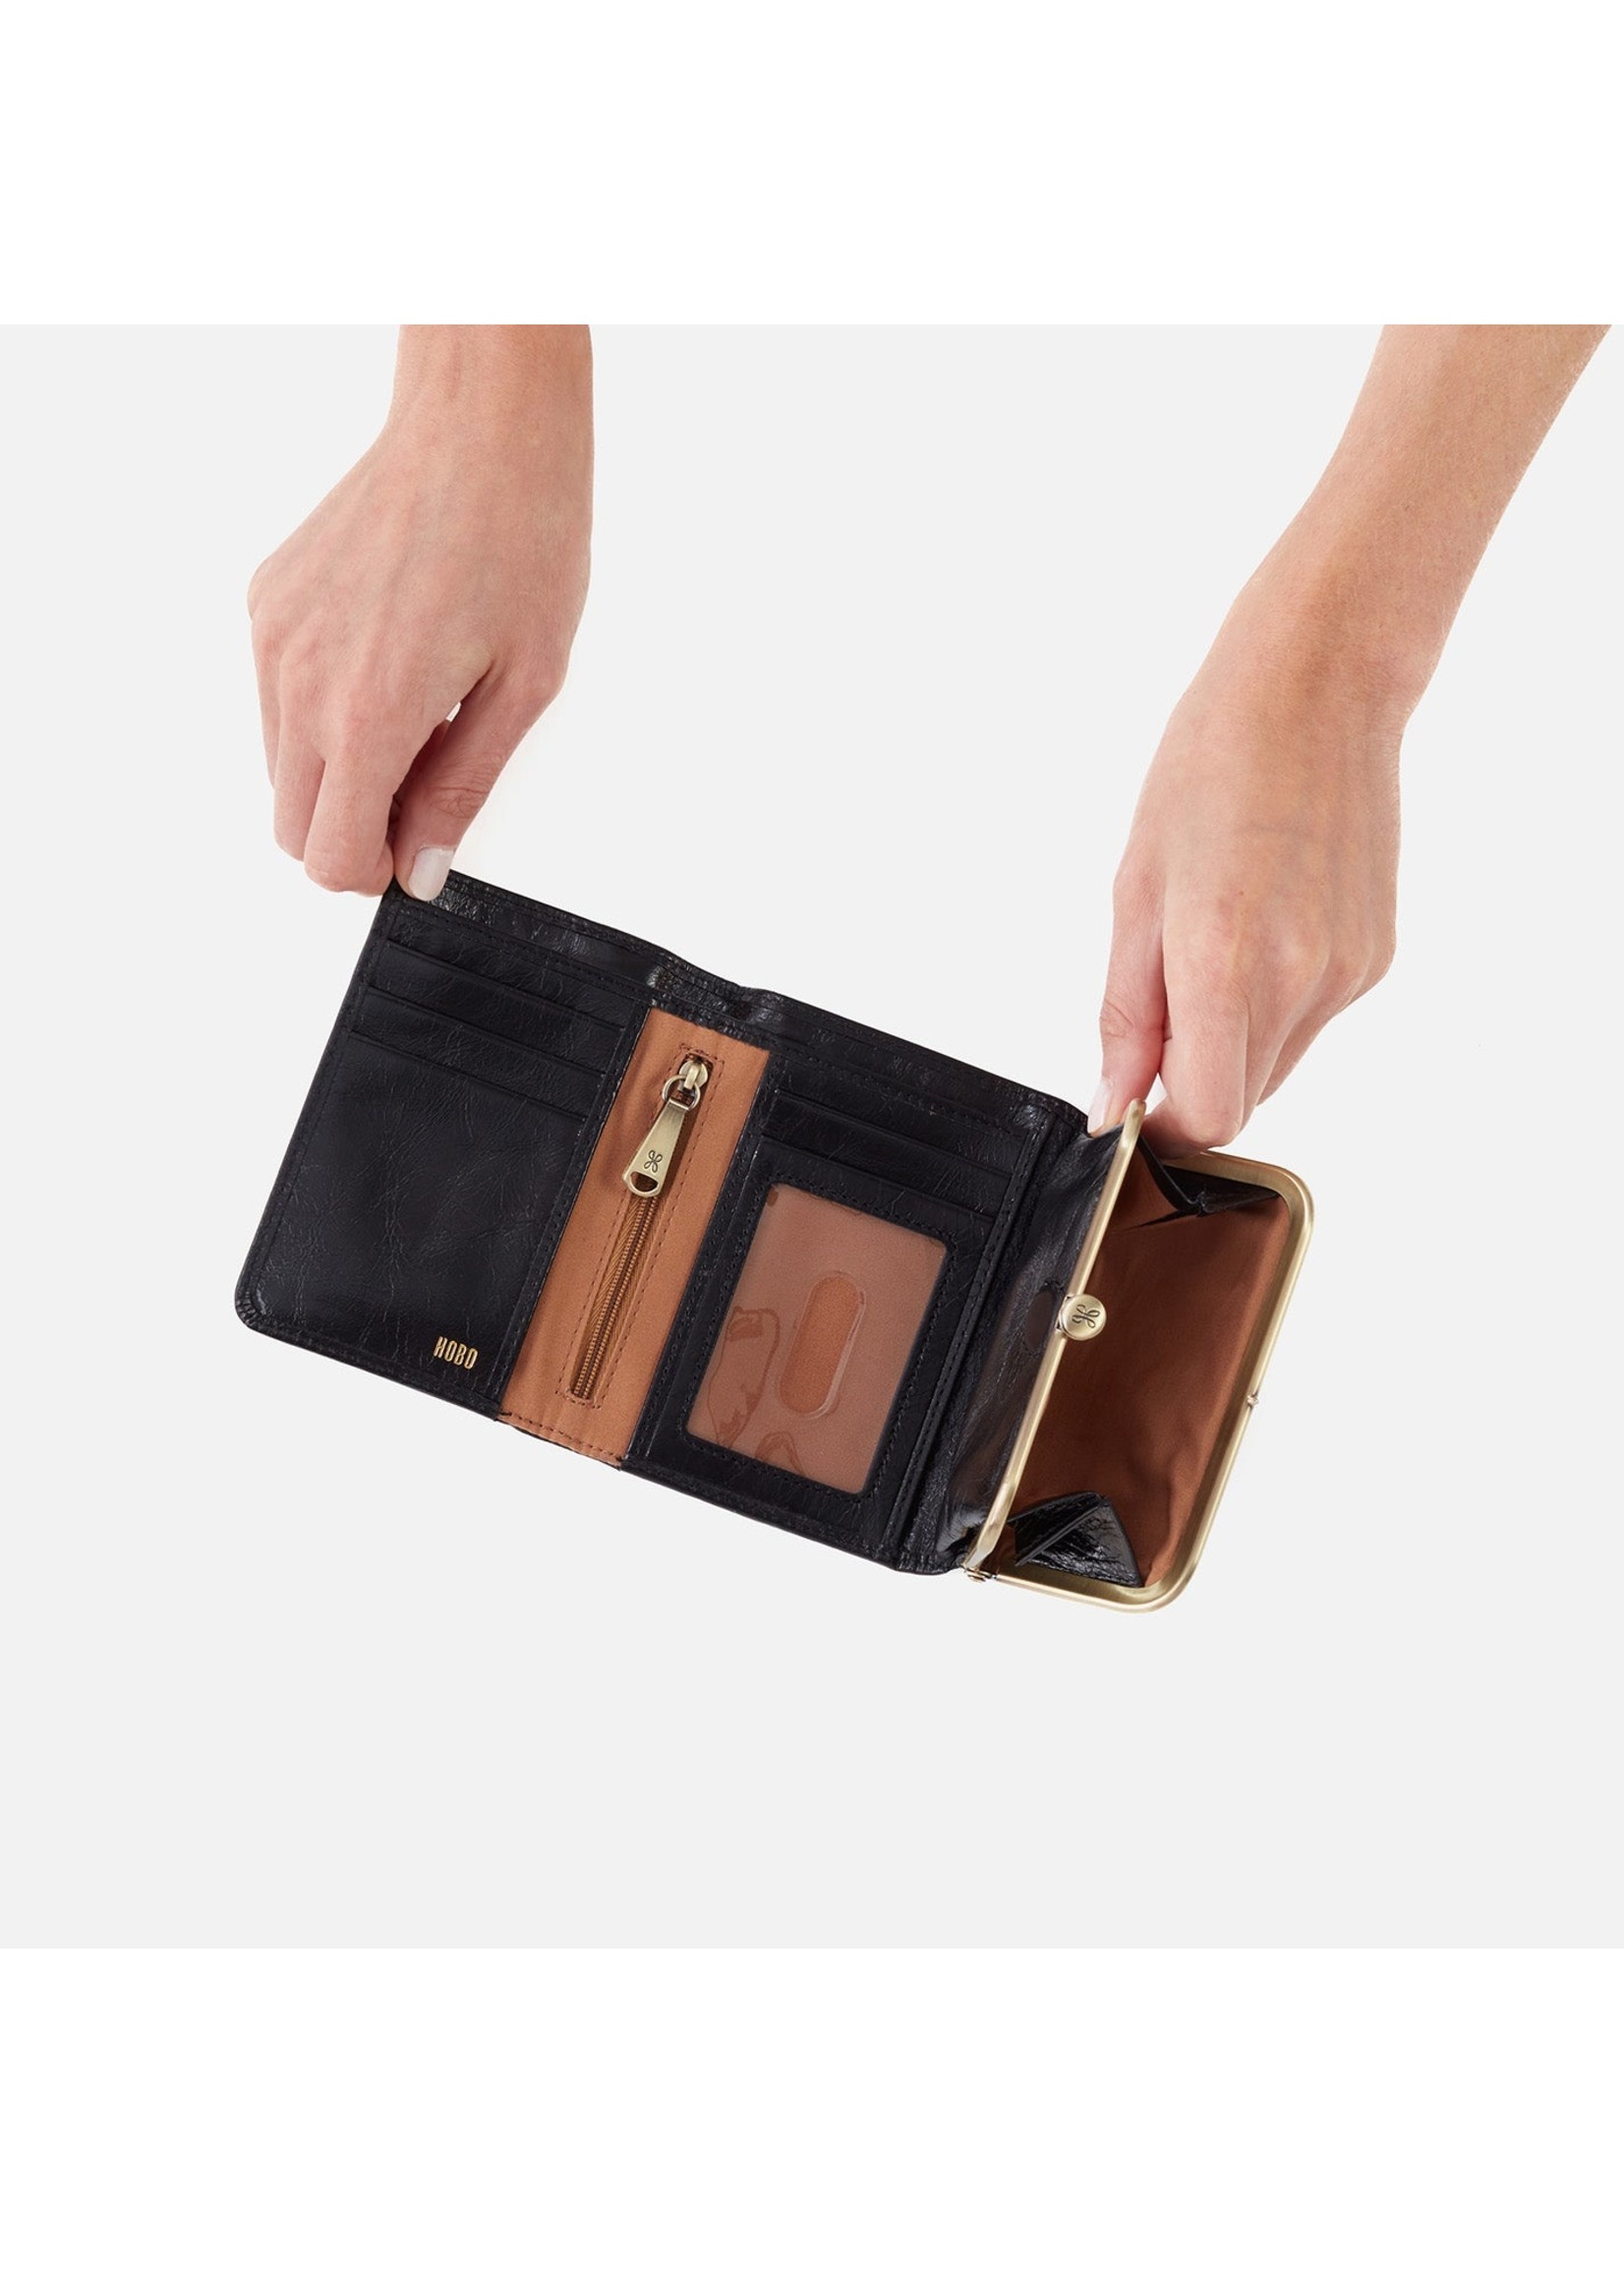 Hobo ROBIN Compact Wallet - Vintage Hide